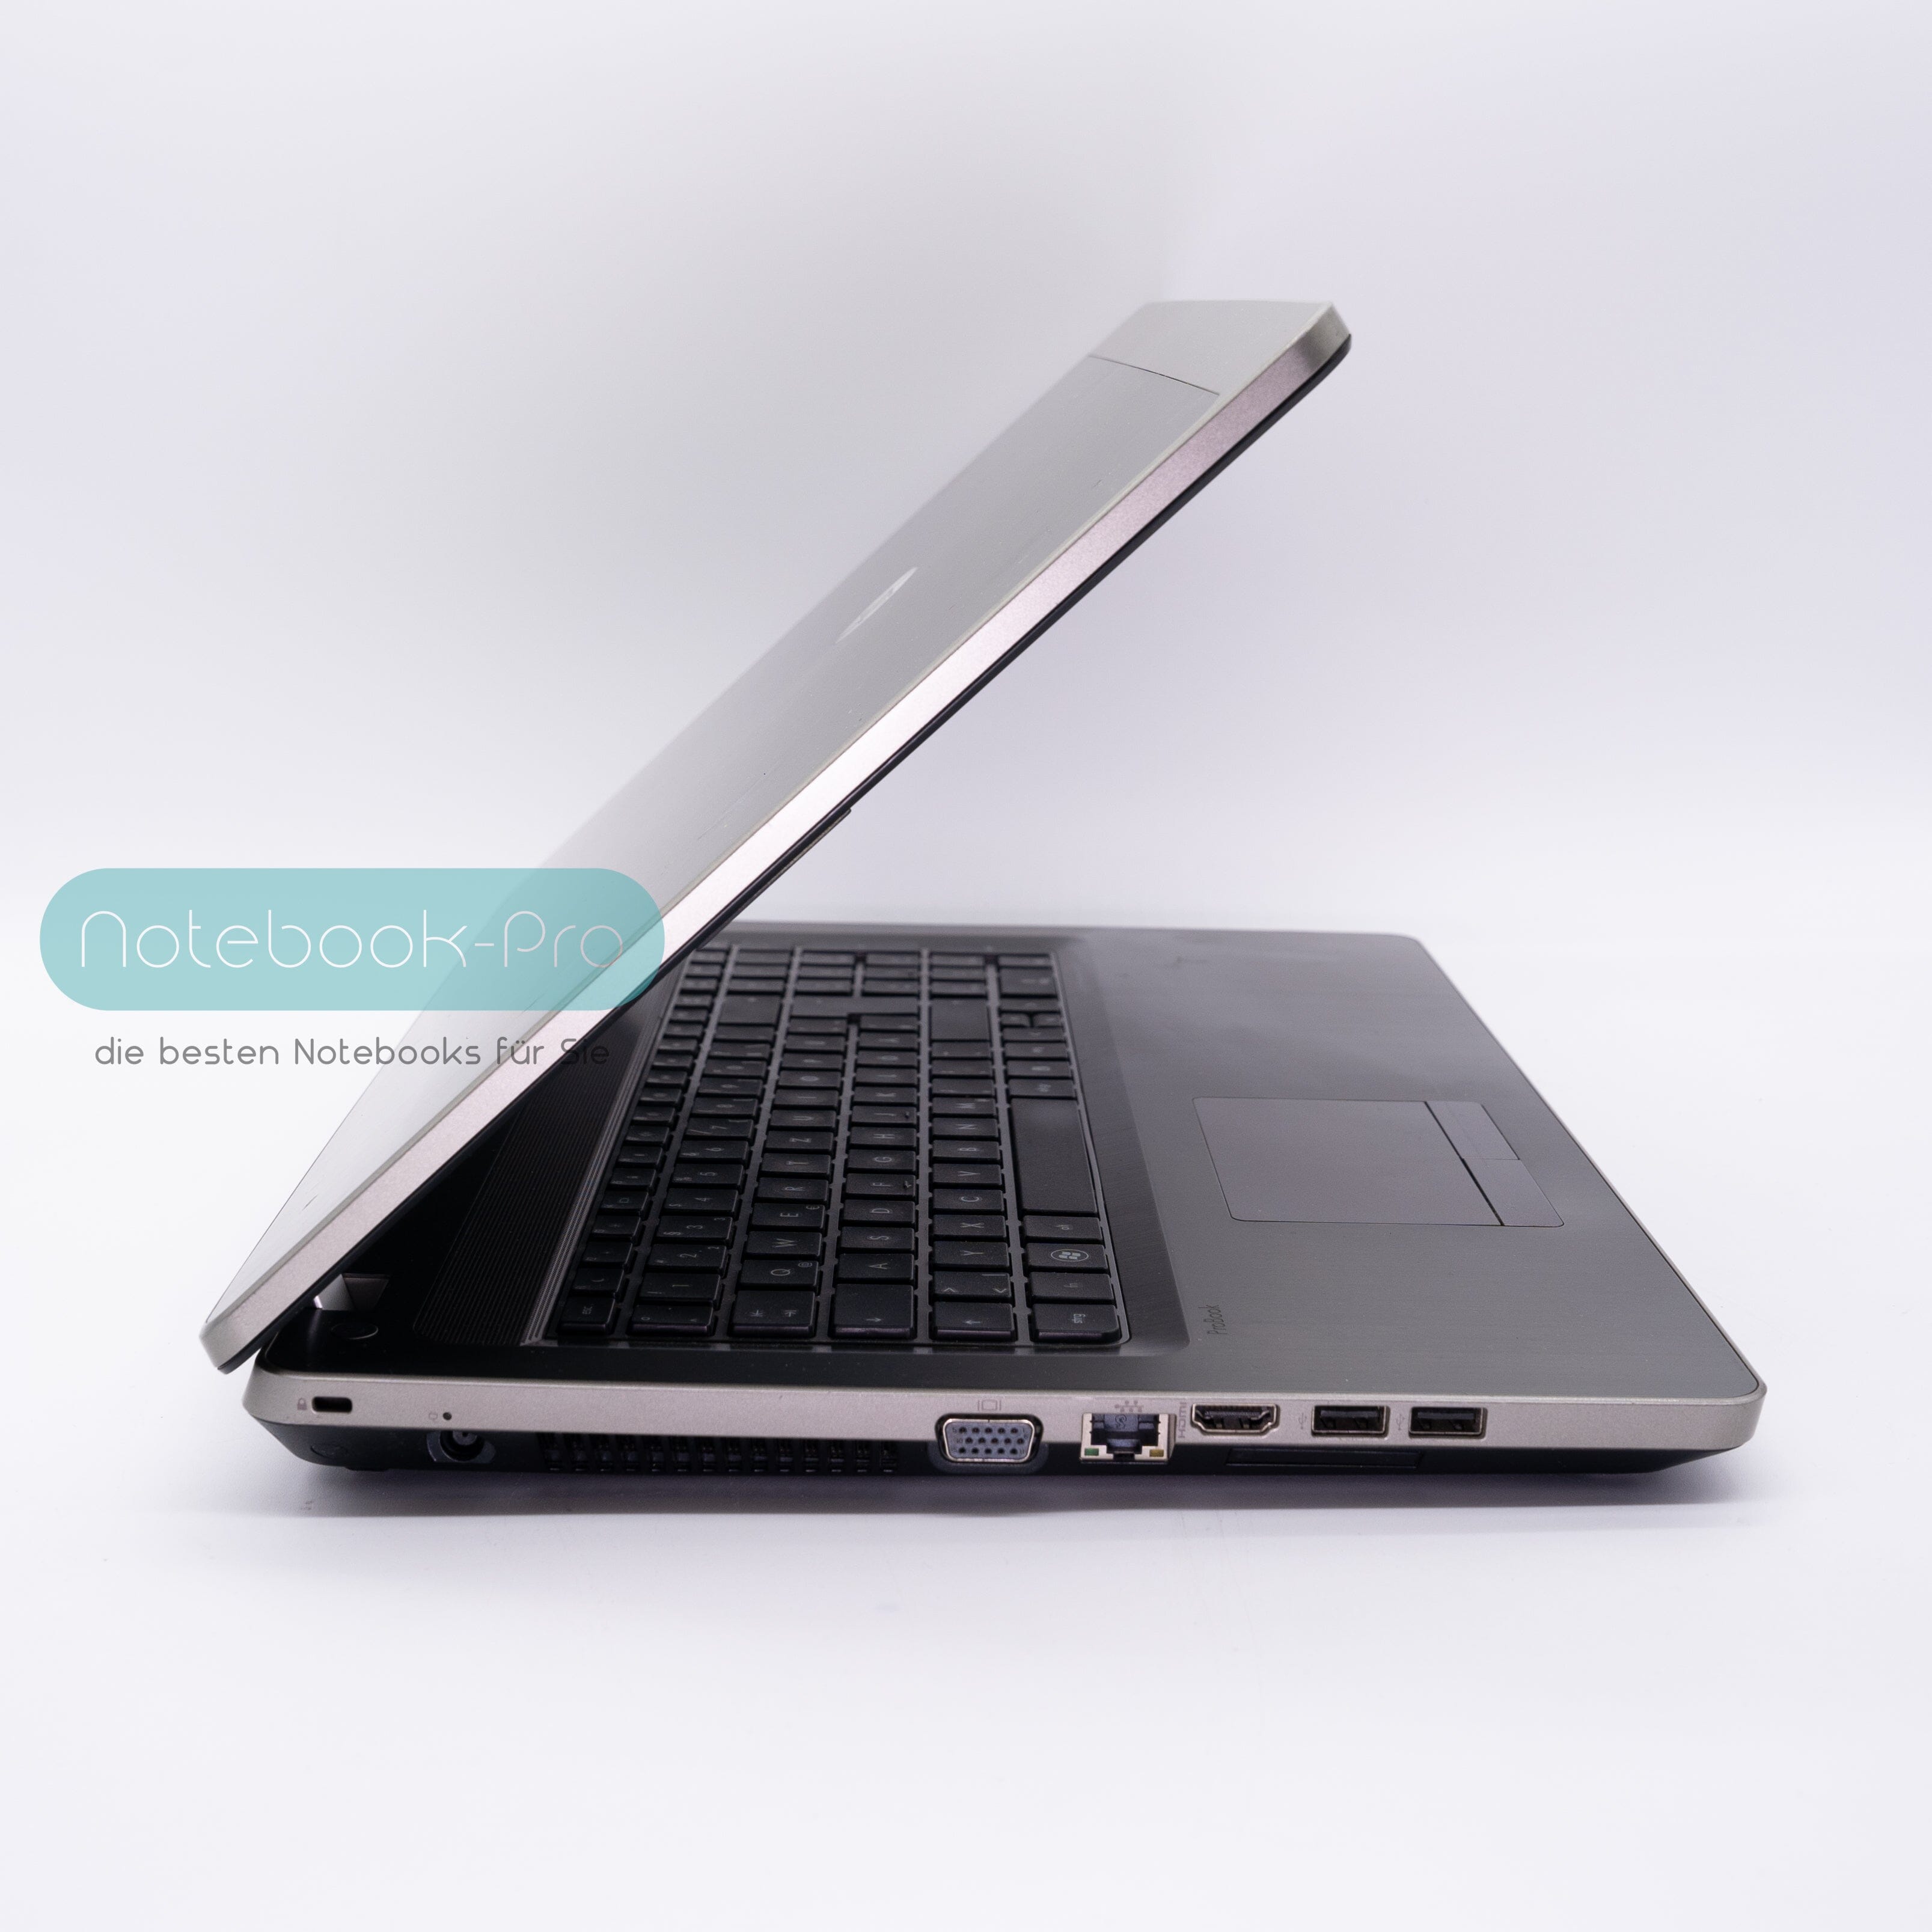 HP ProBook Intel Core i5-3210M 17,3 HD+ DISPLAY 512GB SSD Laptops Notebook-Pro 